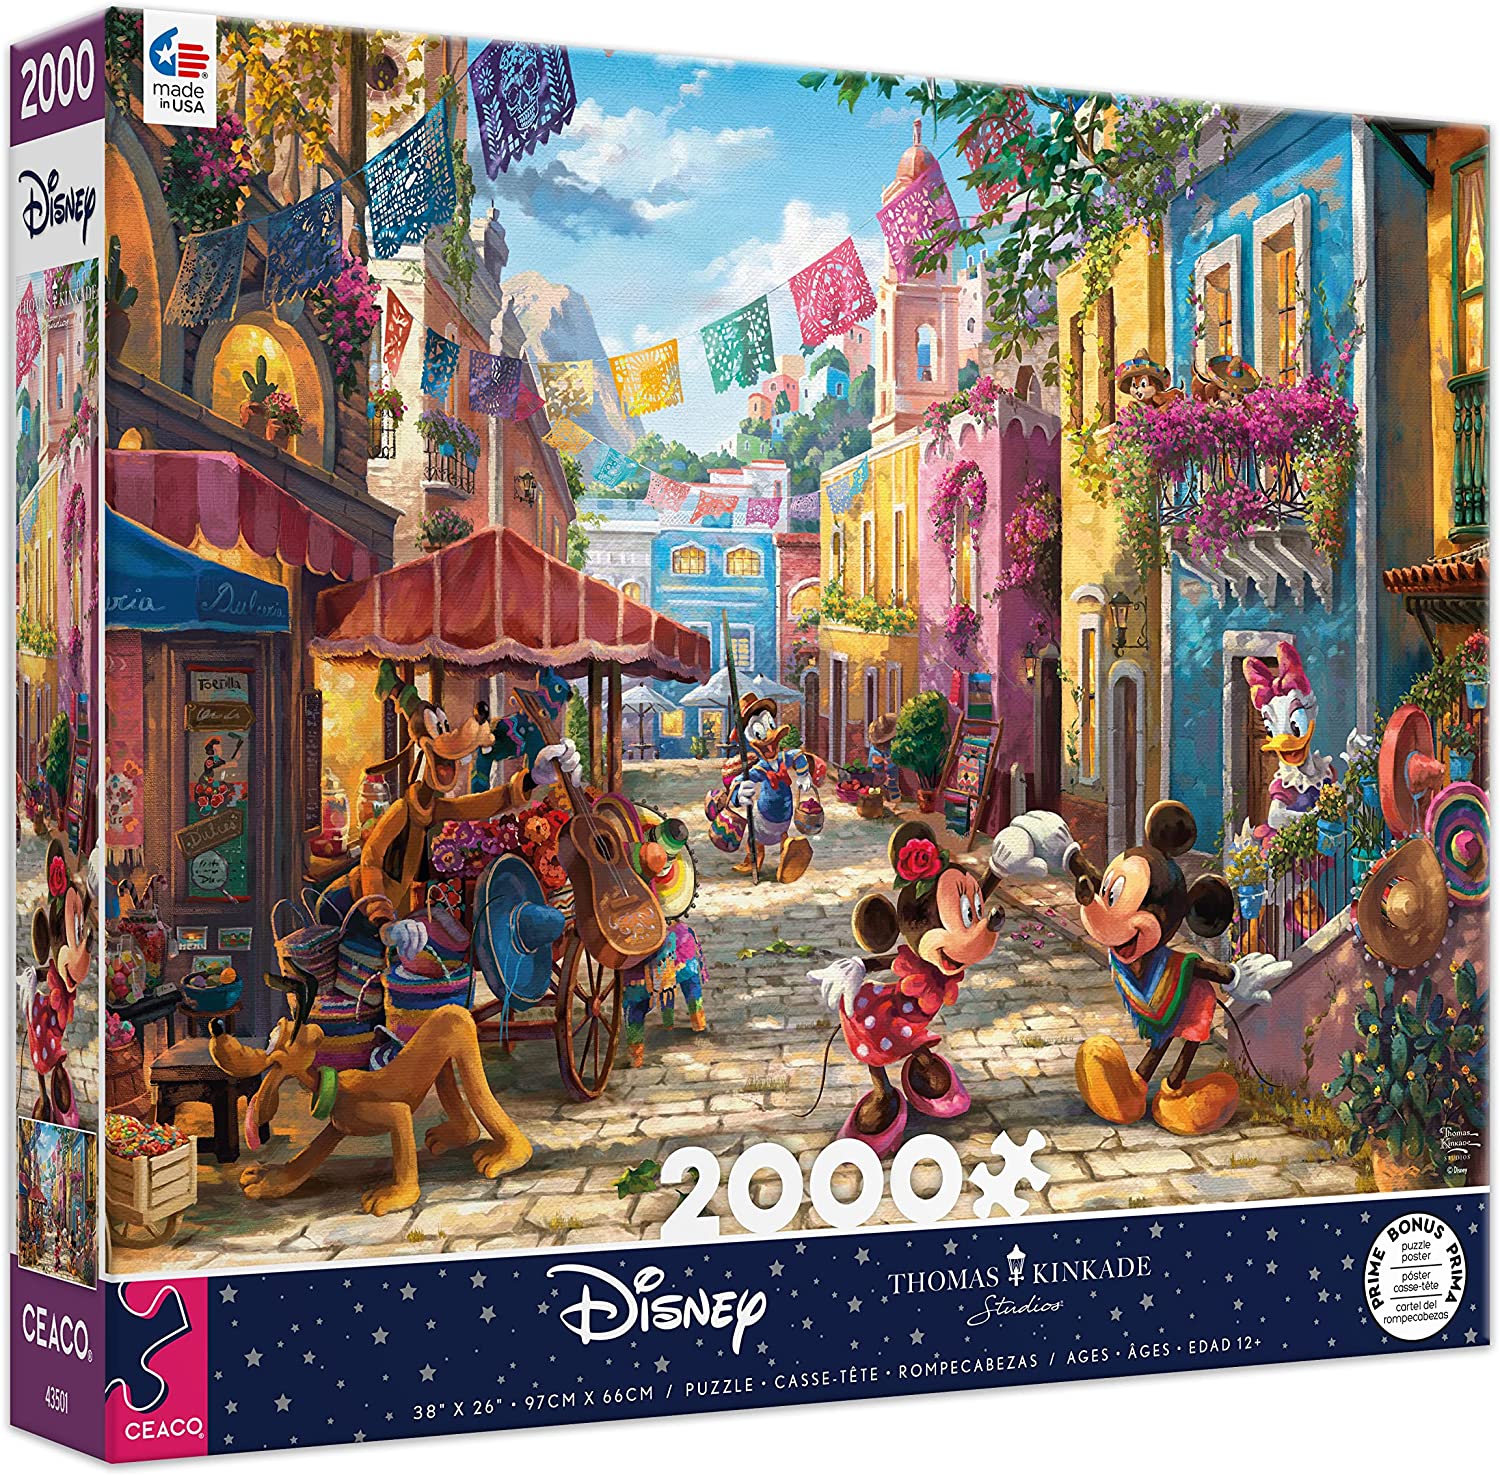 Runaway Railway Jigsaw PUZZLE Mickey and Minnie's Hollywood Studios Disney  World 100 500 1000 2000 PUZZLE-3205 